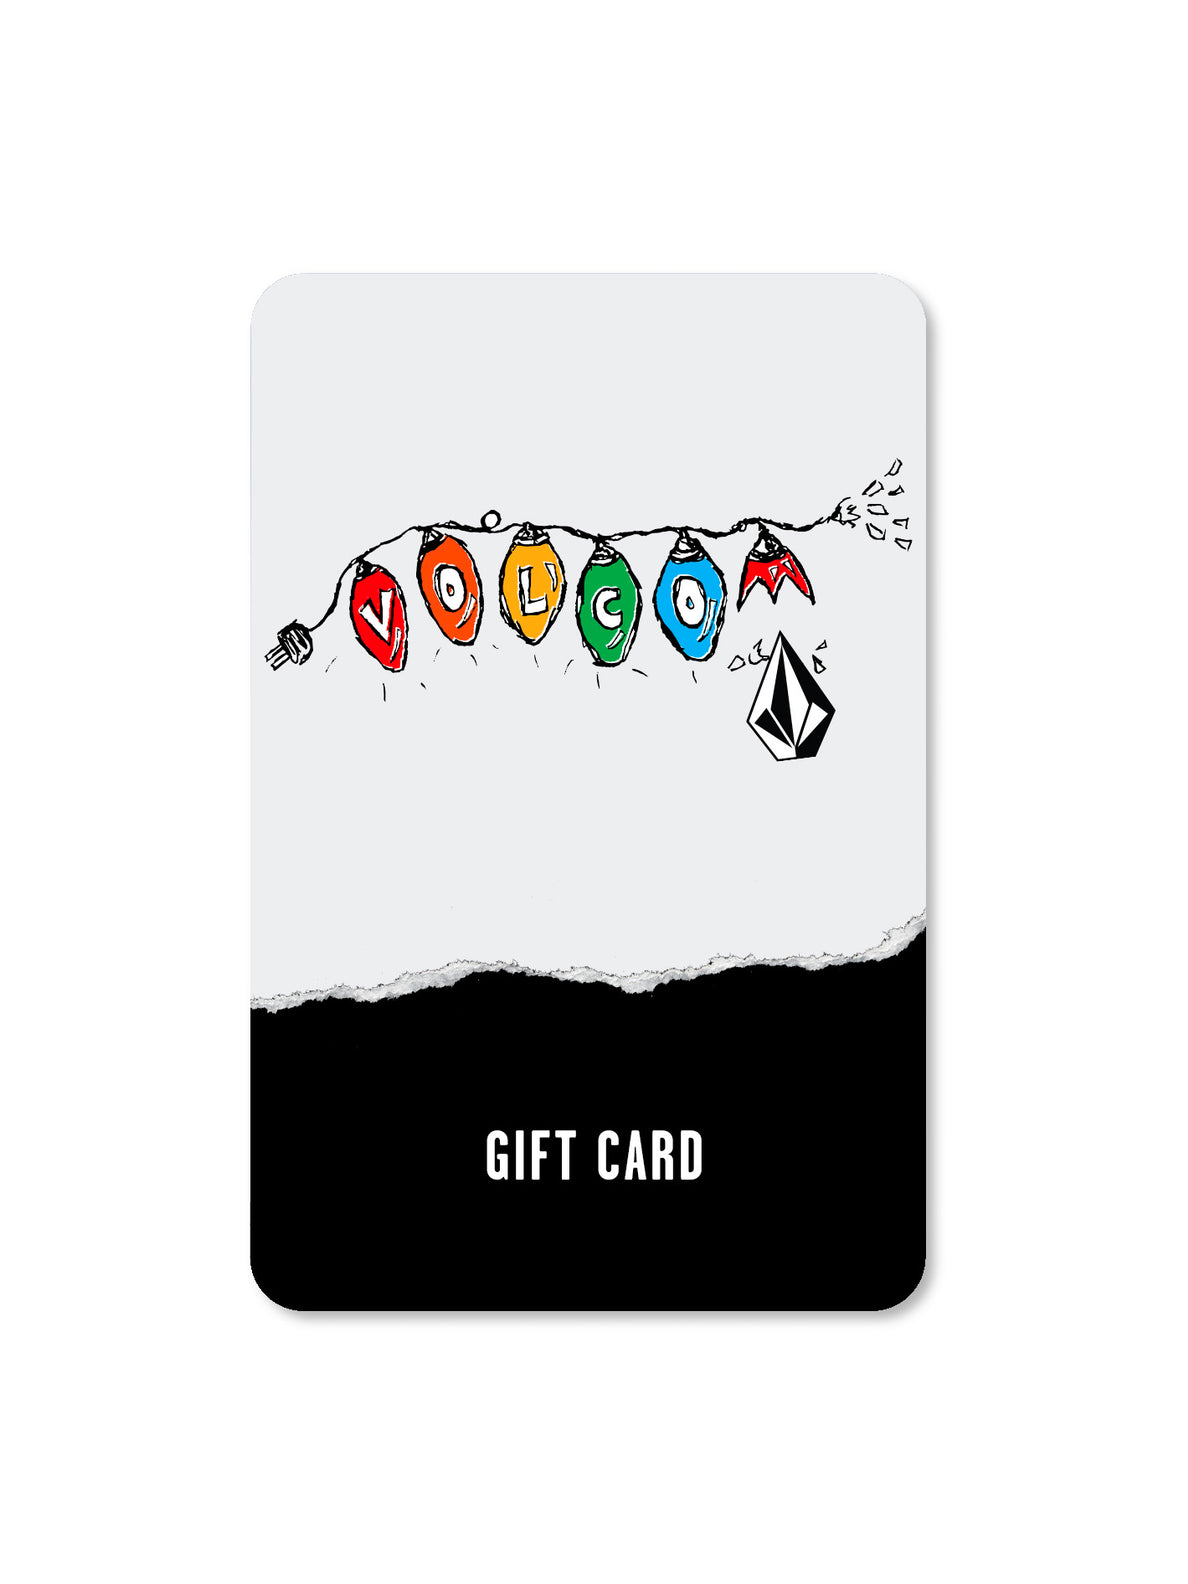 E-gift card